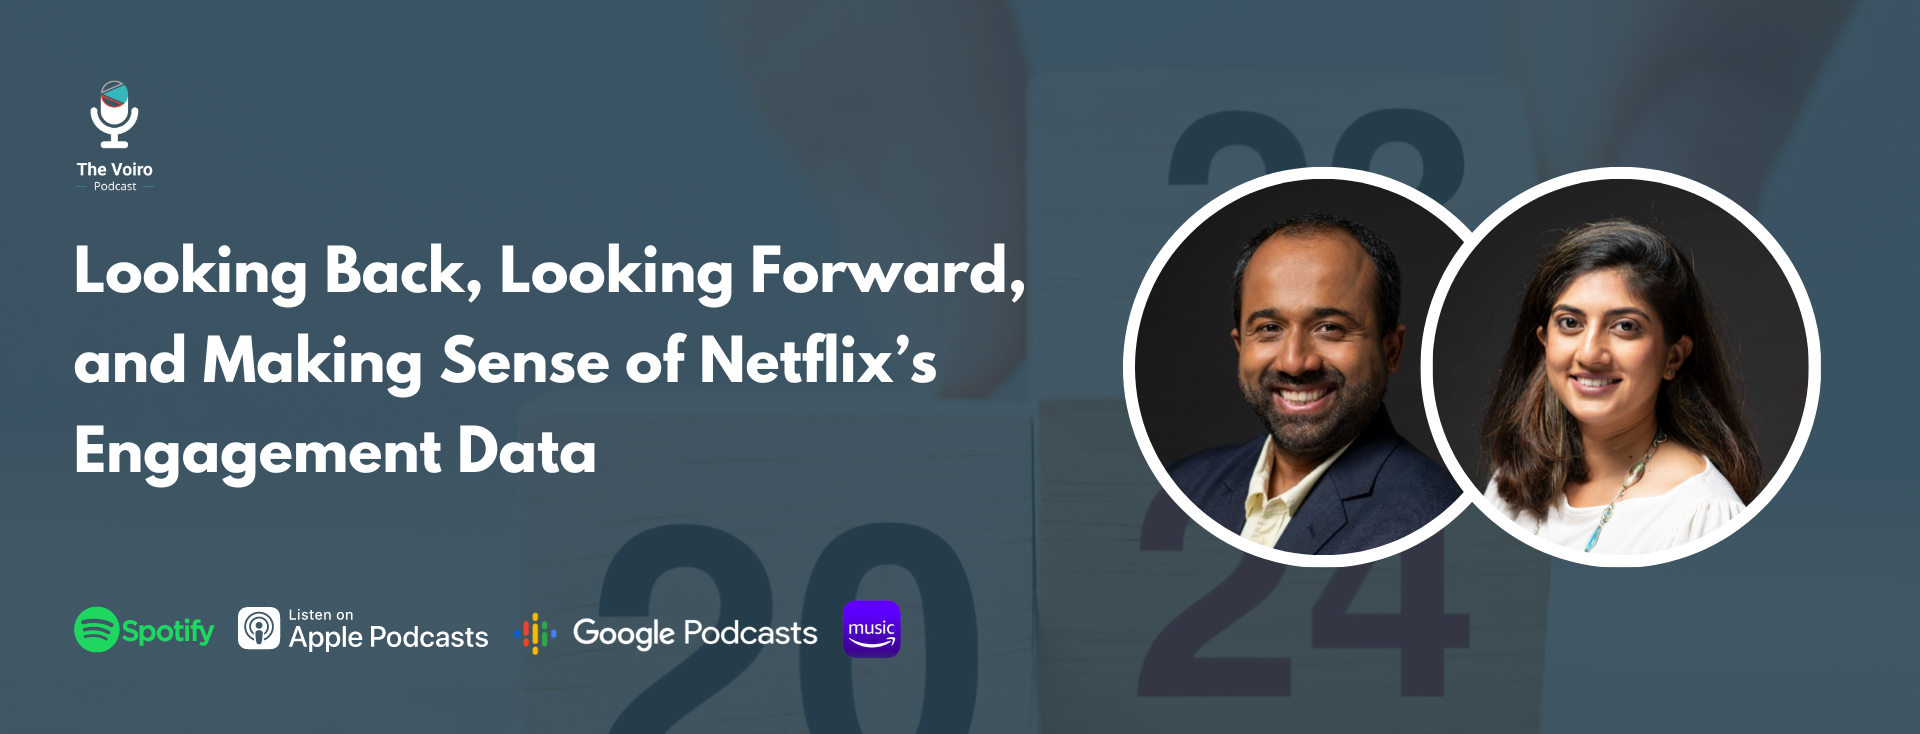 Looking Back, Looking Forward, and Making Sense of Netflix’s Engagement Data